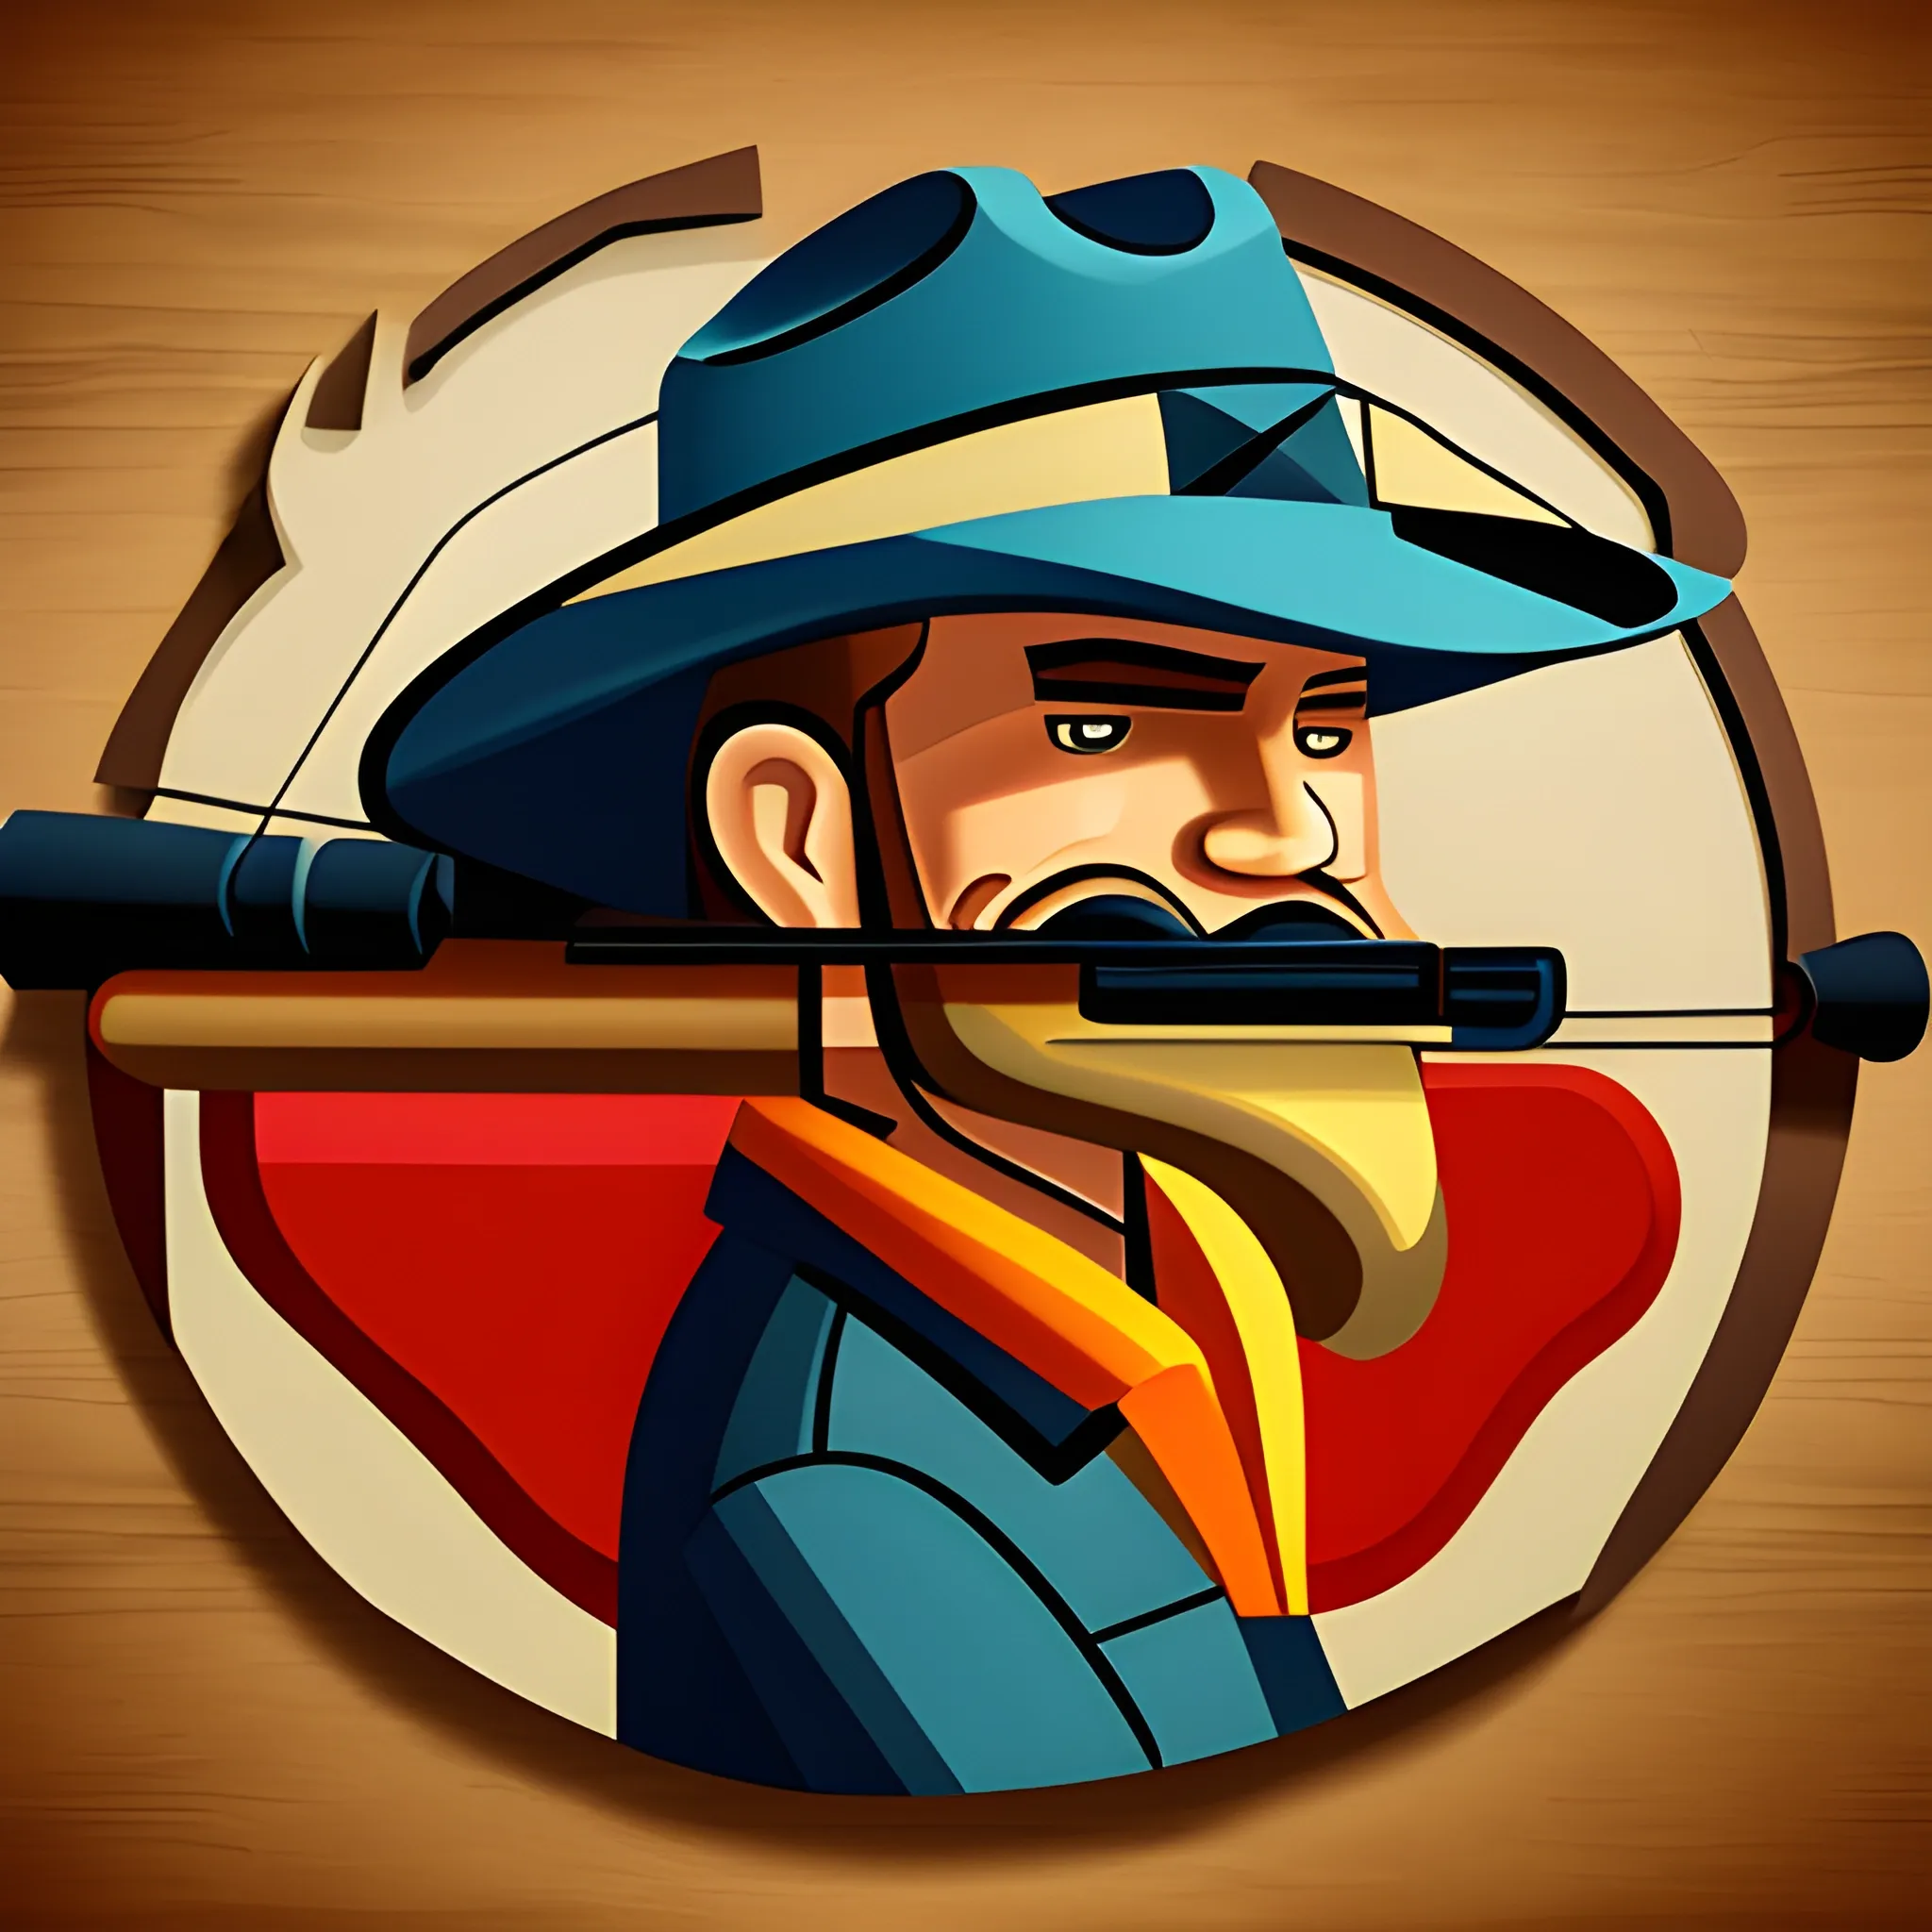 logo of a fishing cowboy hat with a gun, Cartoon, 3D